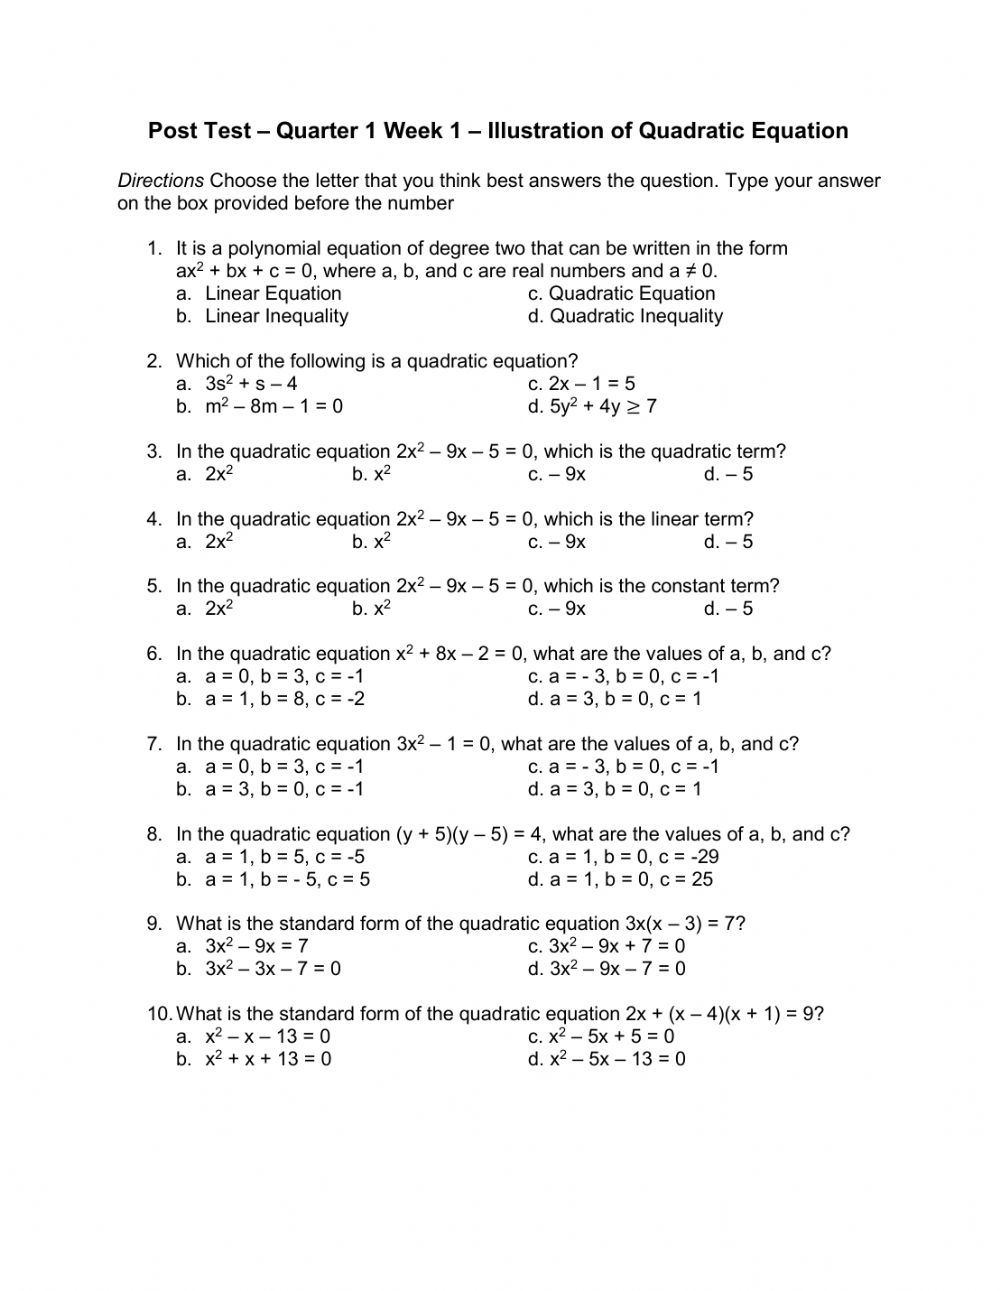 Mathematics 9 Quarter1 Week1 Post Test Summative Test In Illustration